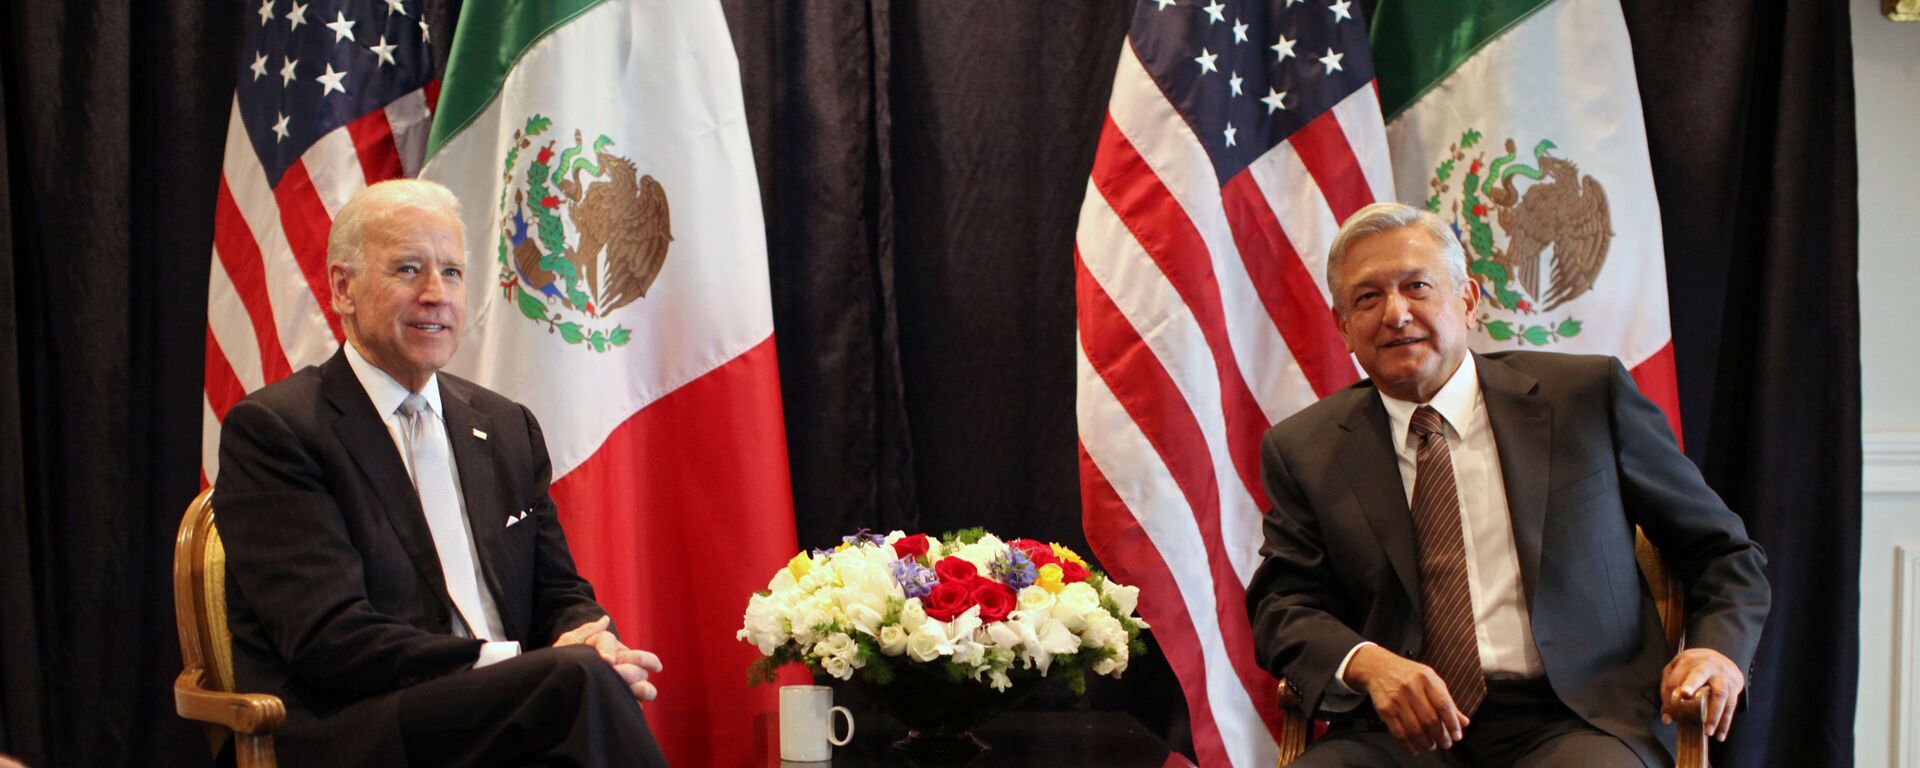 Joe Biden y Andrés Manuel López Obrador, 2012 - Sputnik Mundo, 1920, 20.05.2021